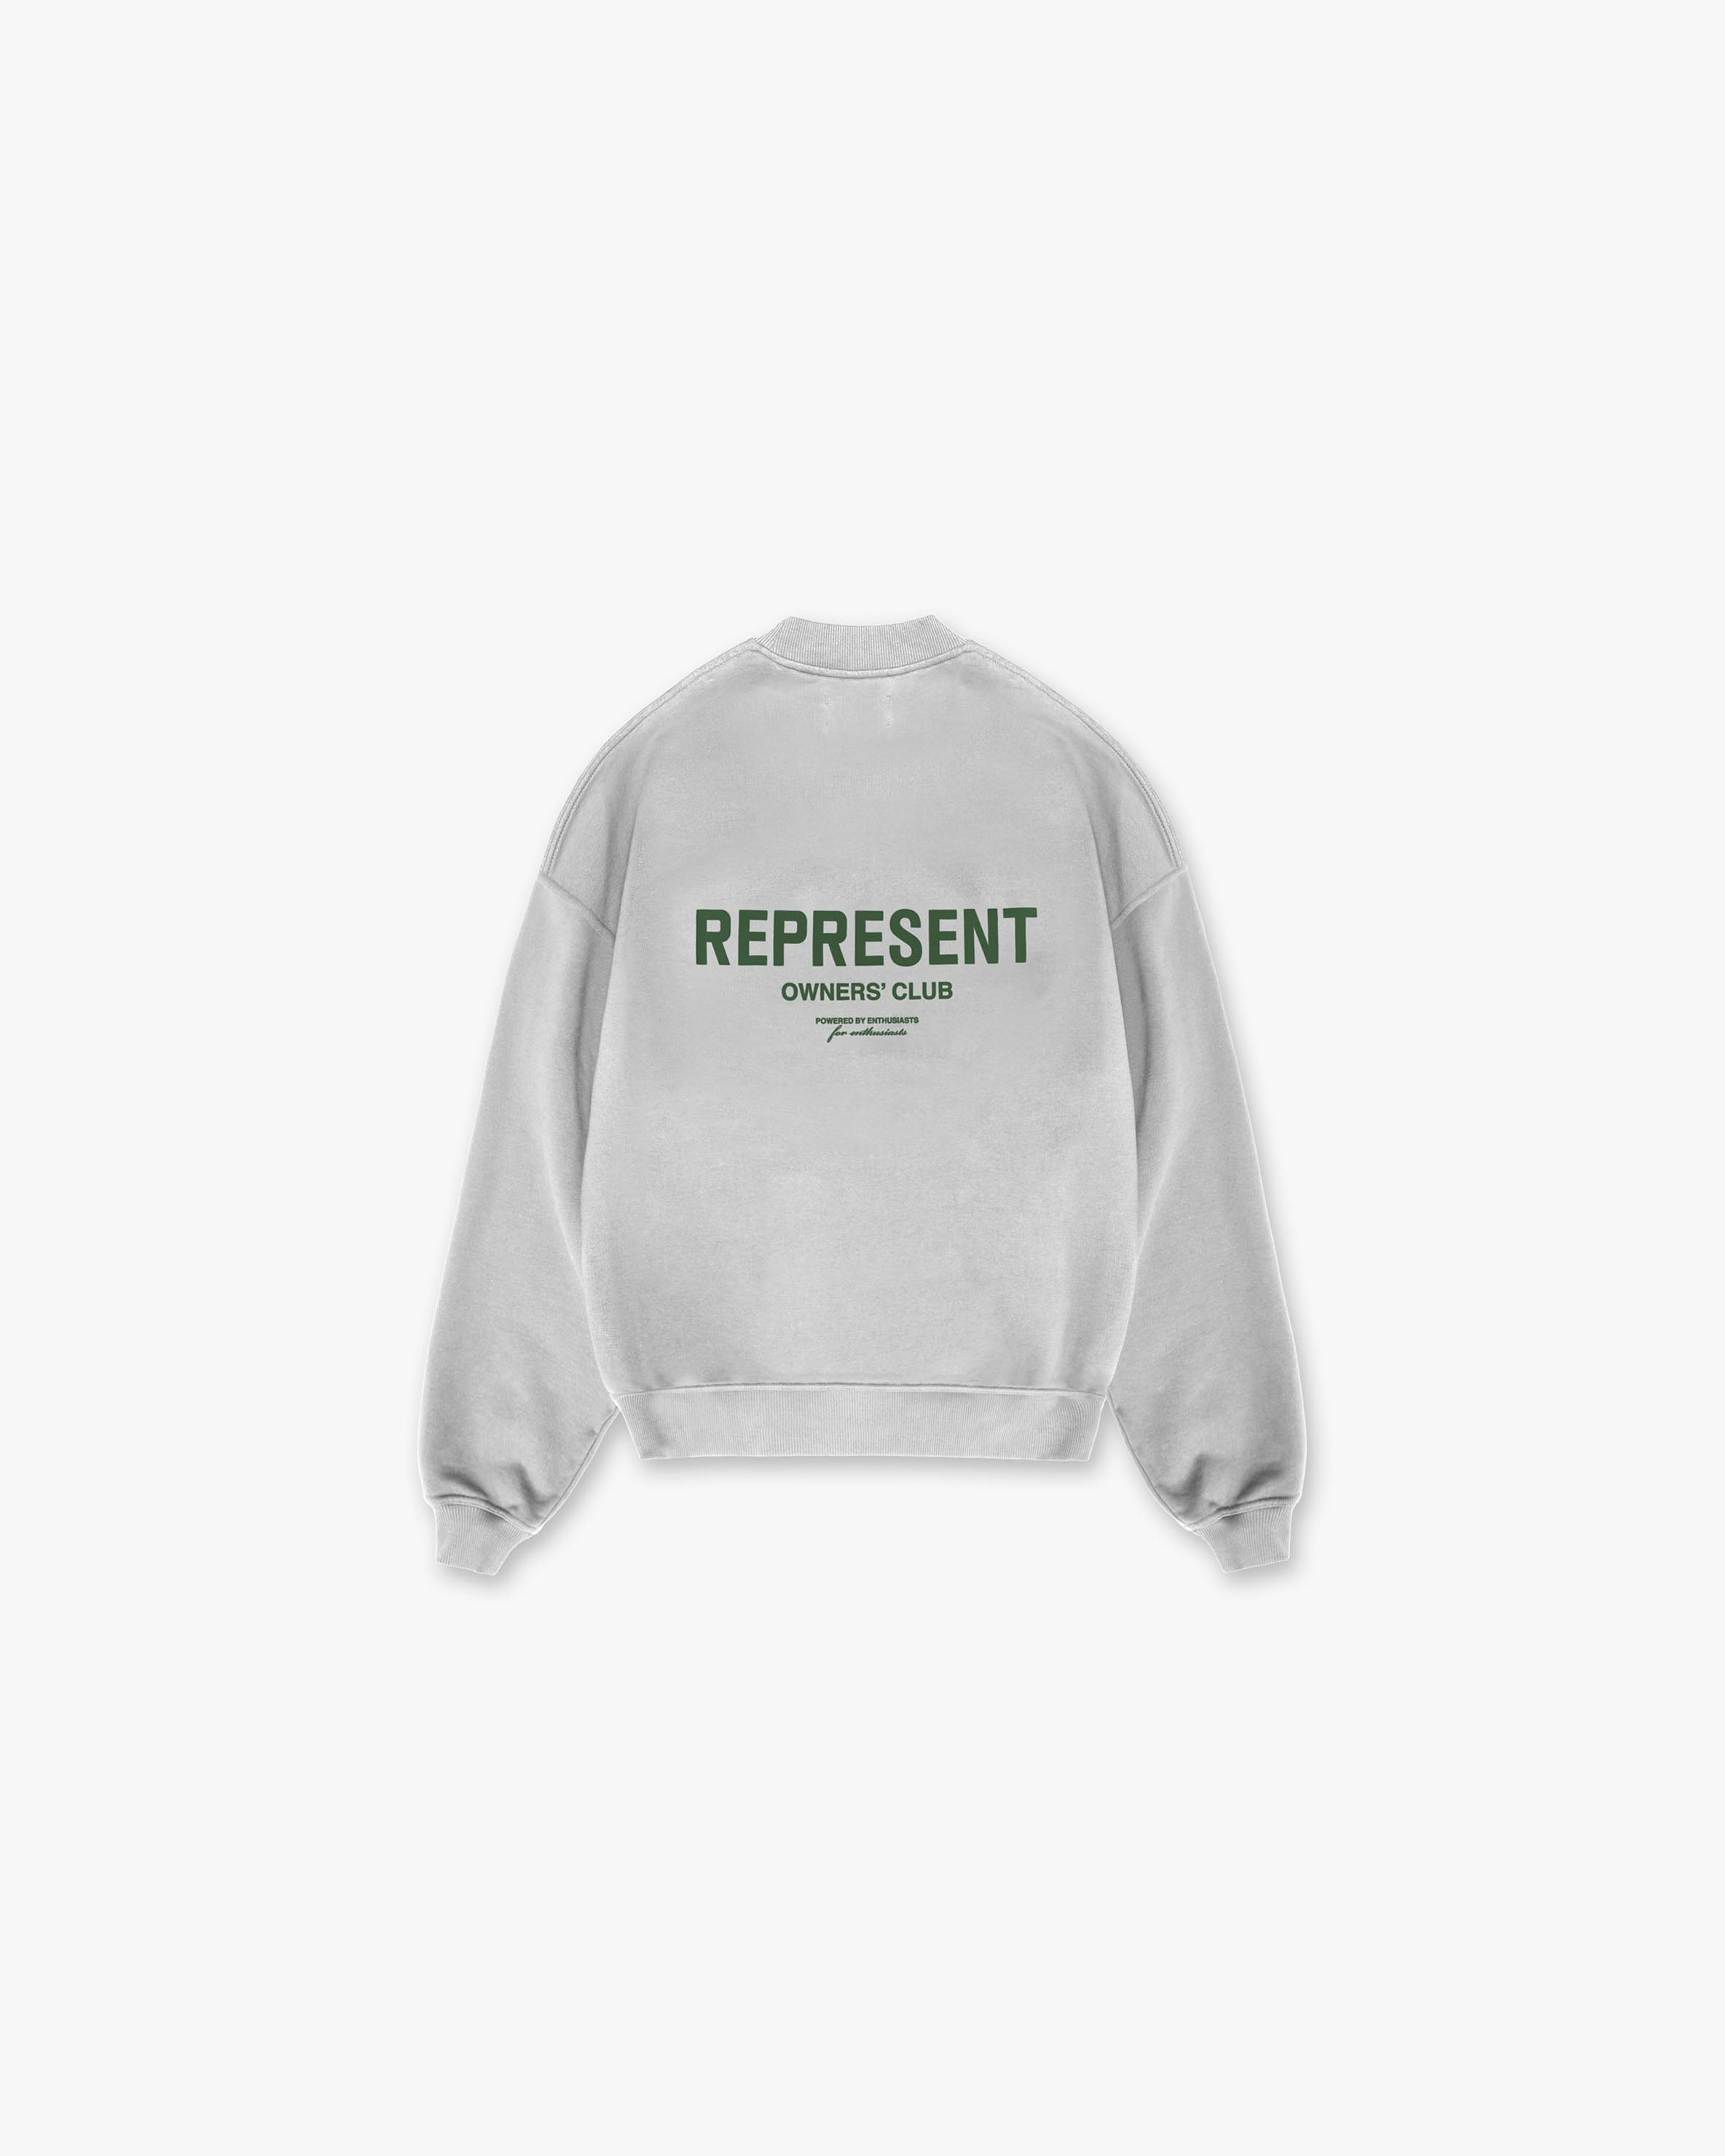 Represent Owners Club Sweater - Ash Grey Racing Green